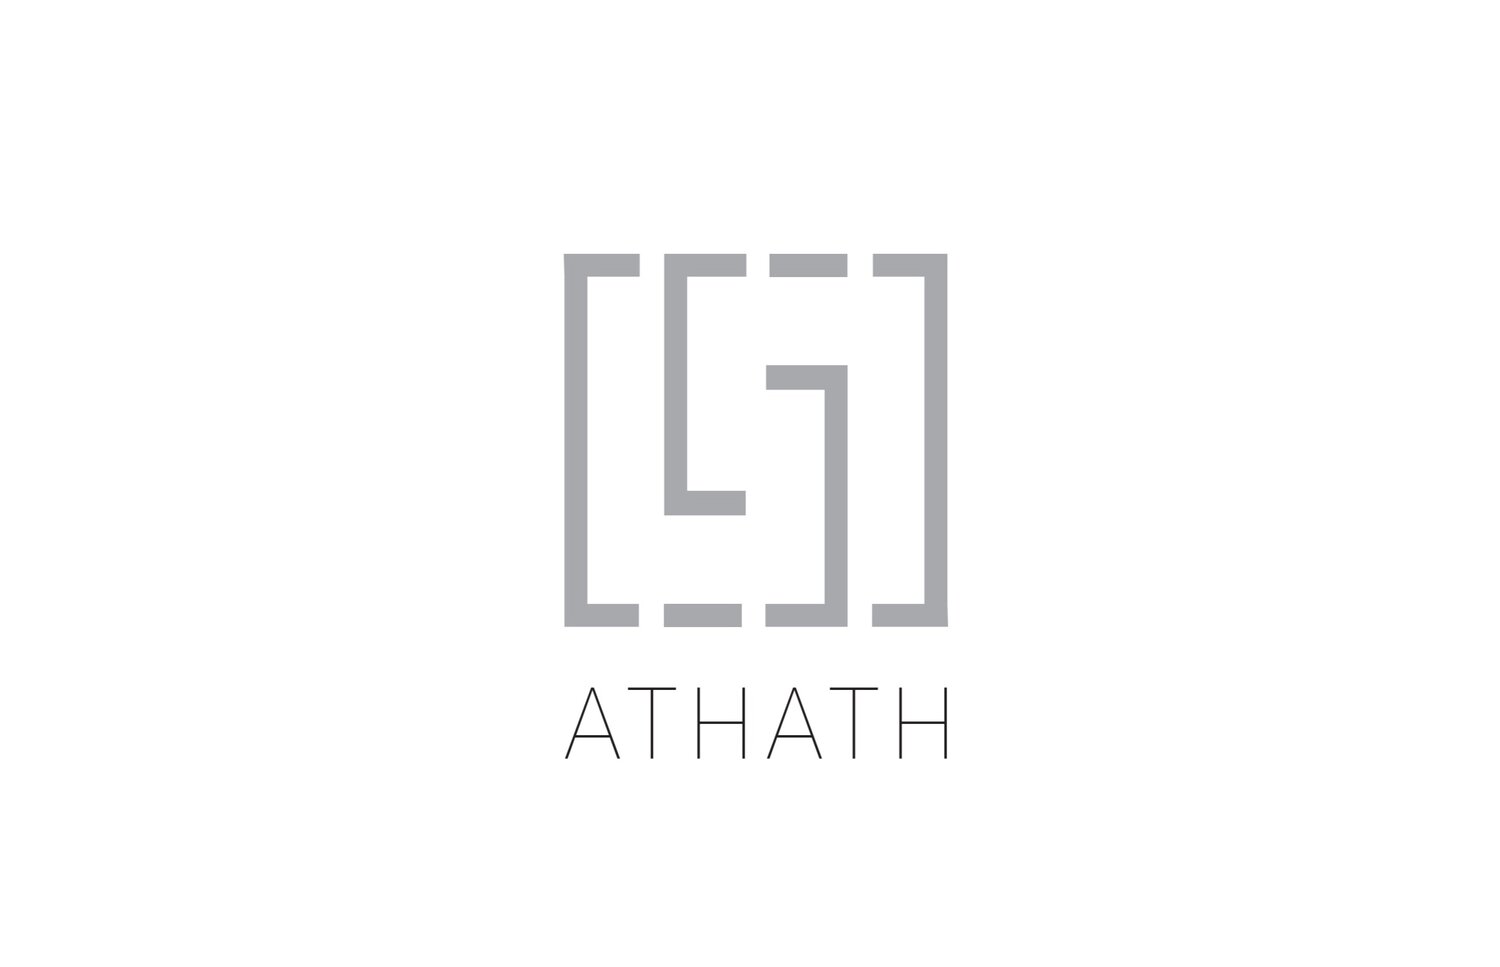 Athath